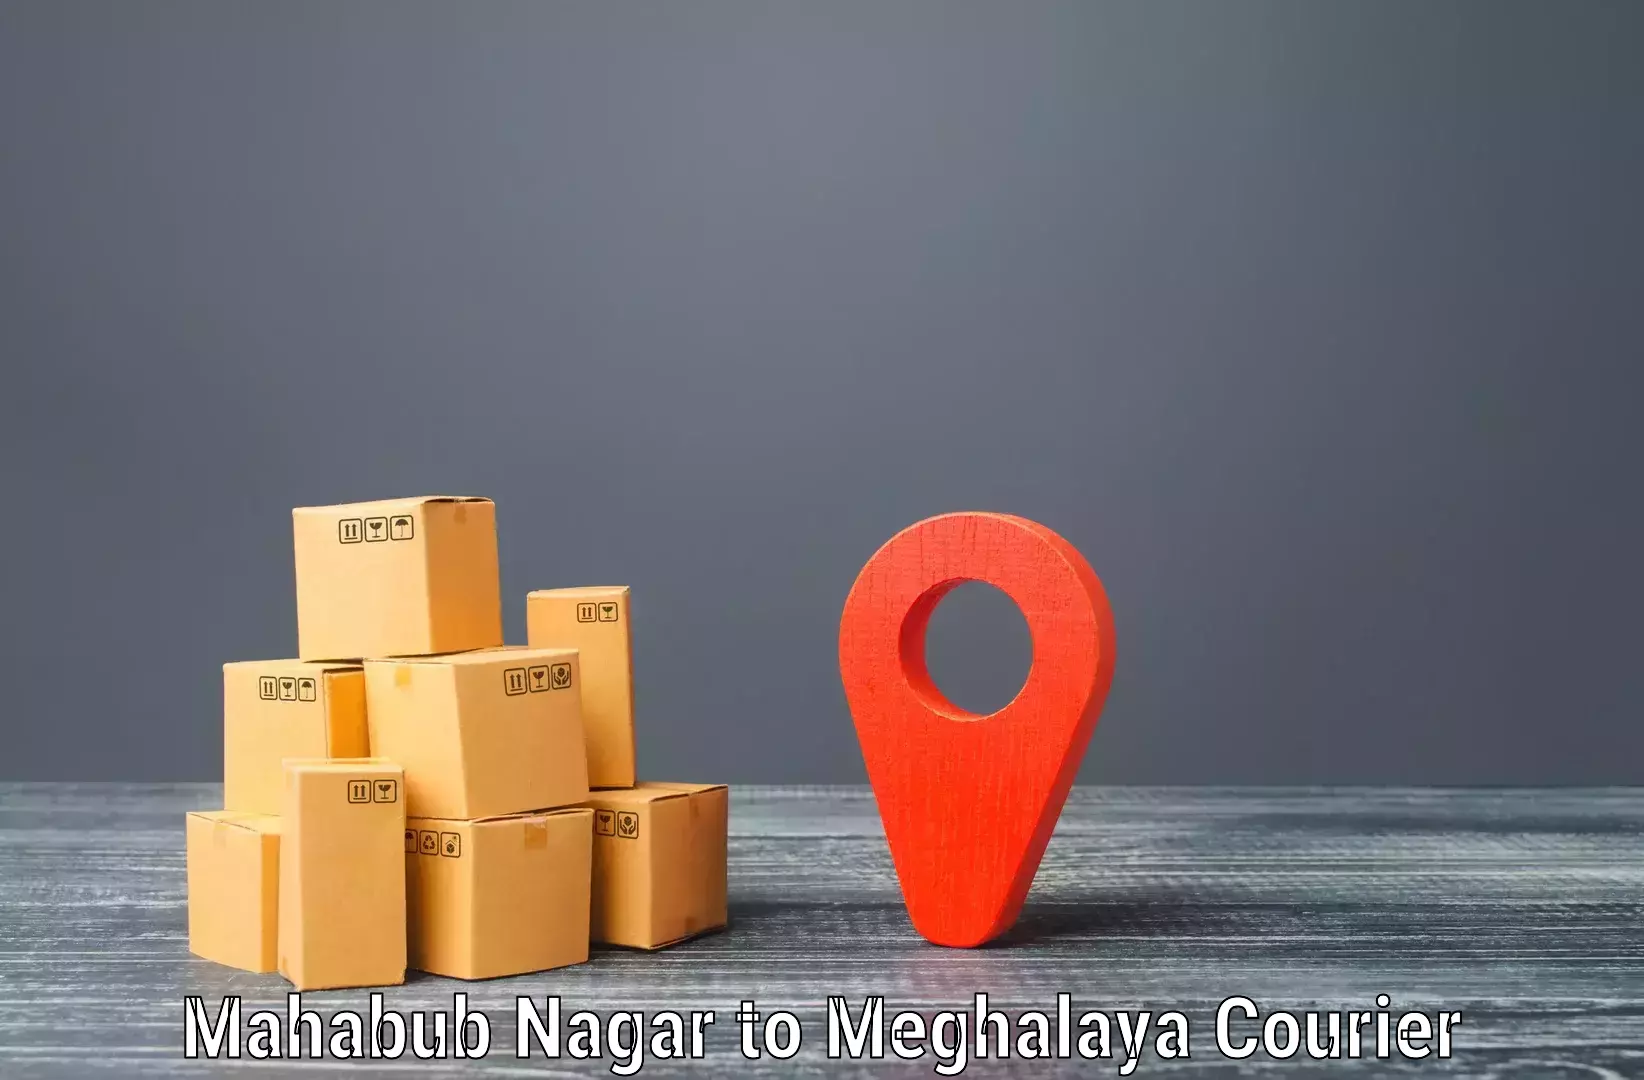 Courier service partnerships Mahabub Nagar to Meghalaya